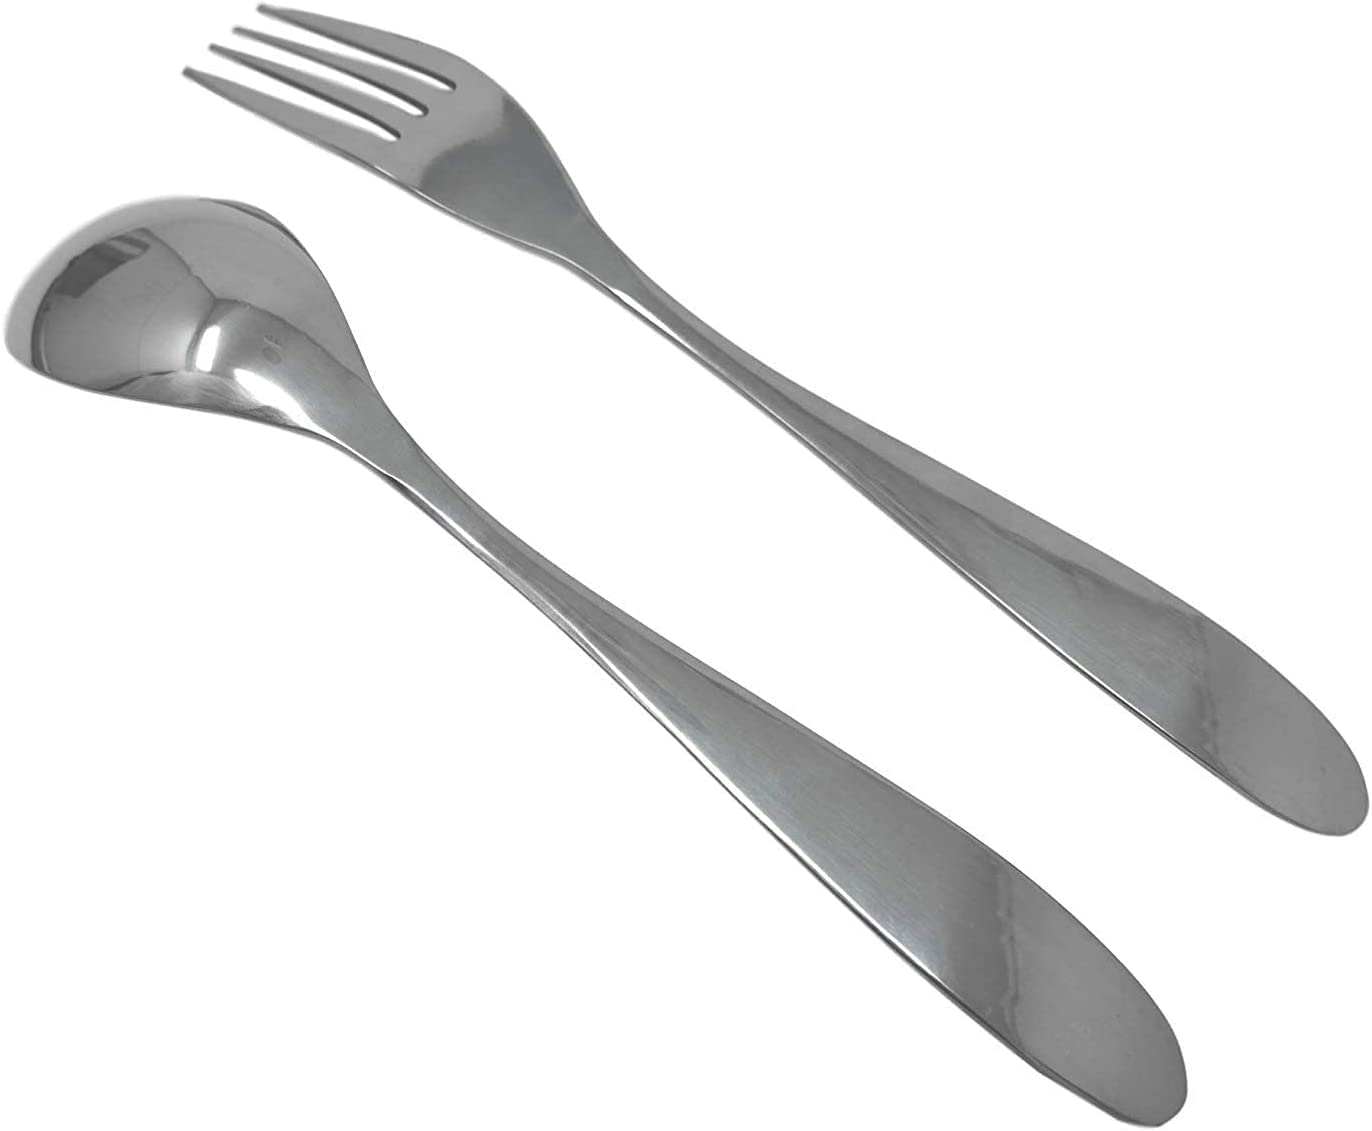 Valtcan Titanium Fork Spoon Knife Teaspoon Kitchen Flatware Long Dinner Size Travel Utensils Set 105g